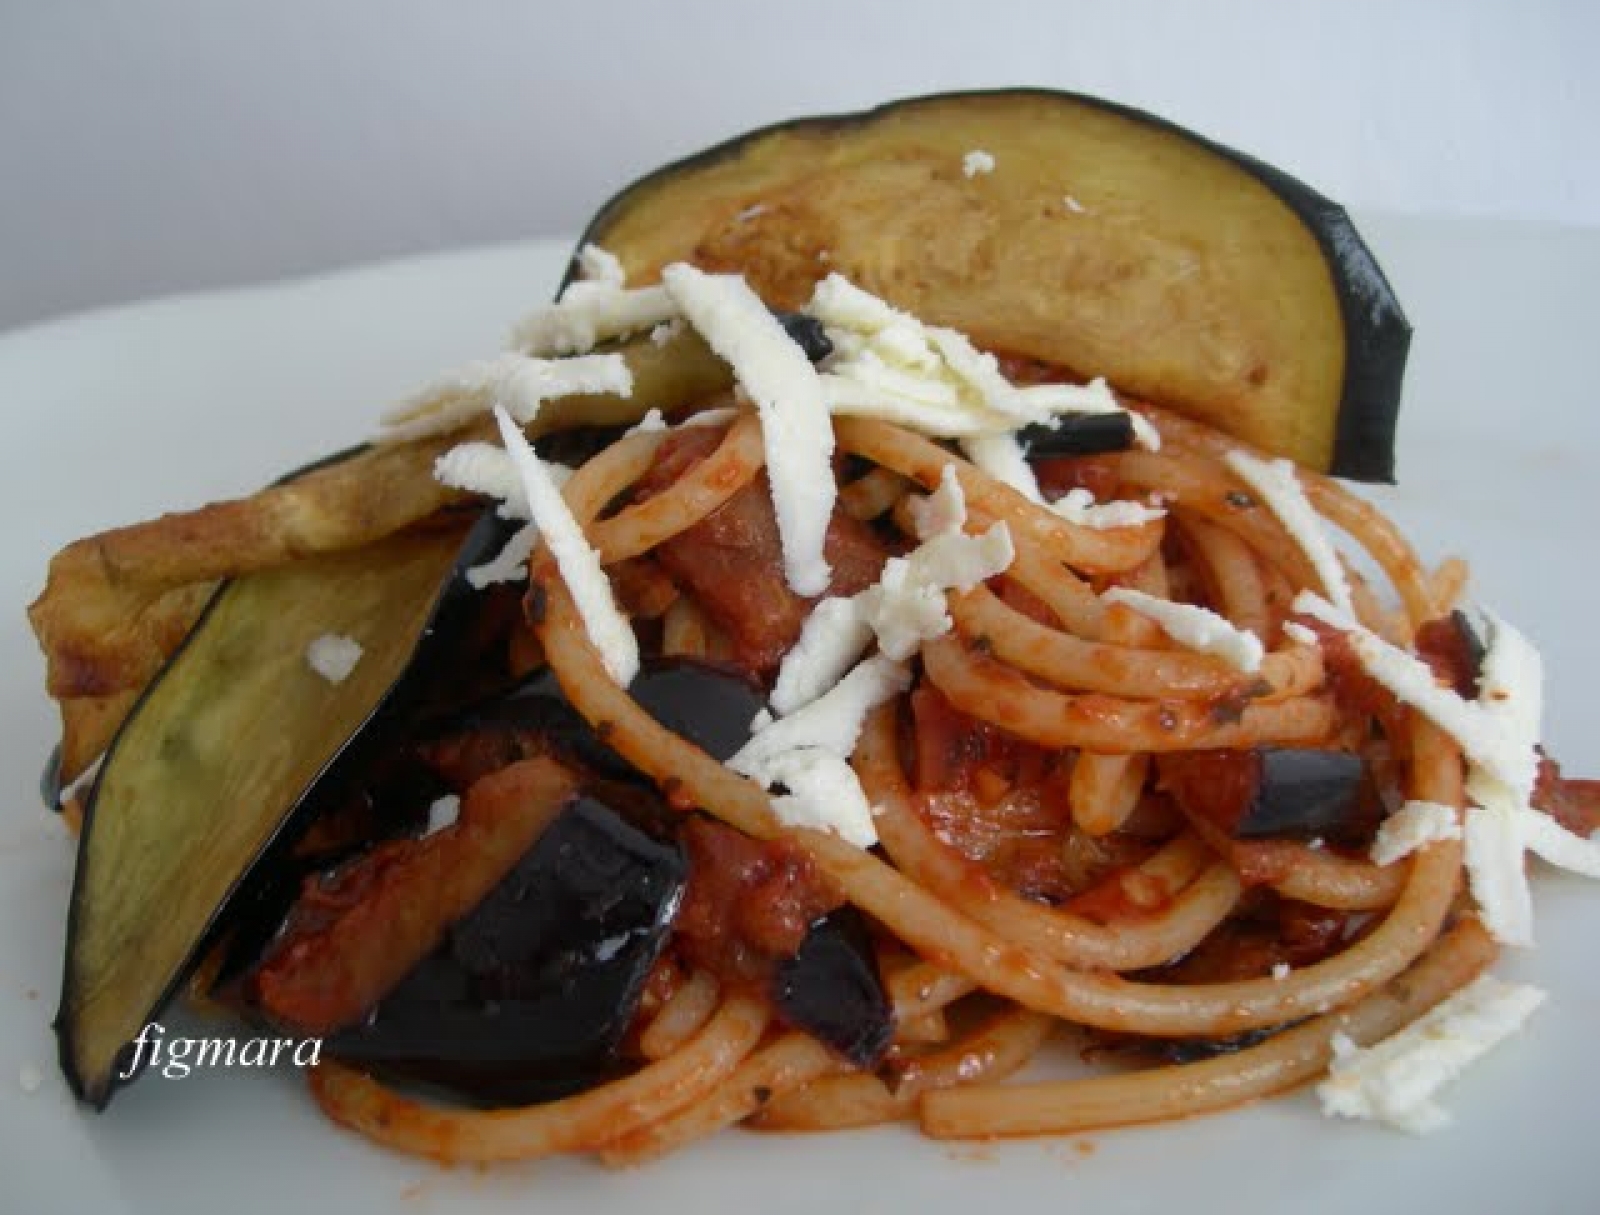 Pasta alla norma czyli Spaghetti z bakłażanem